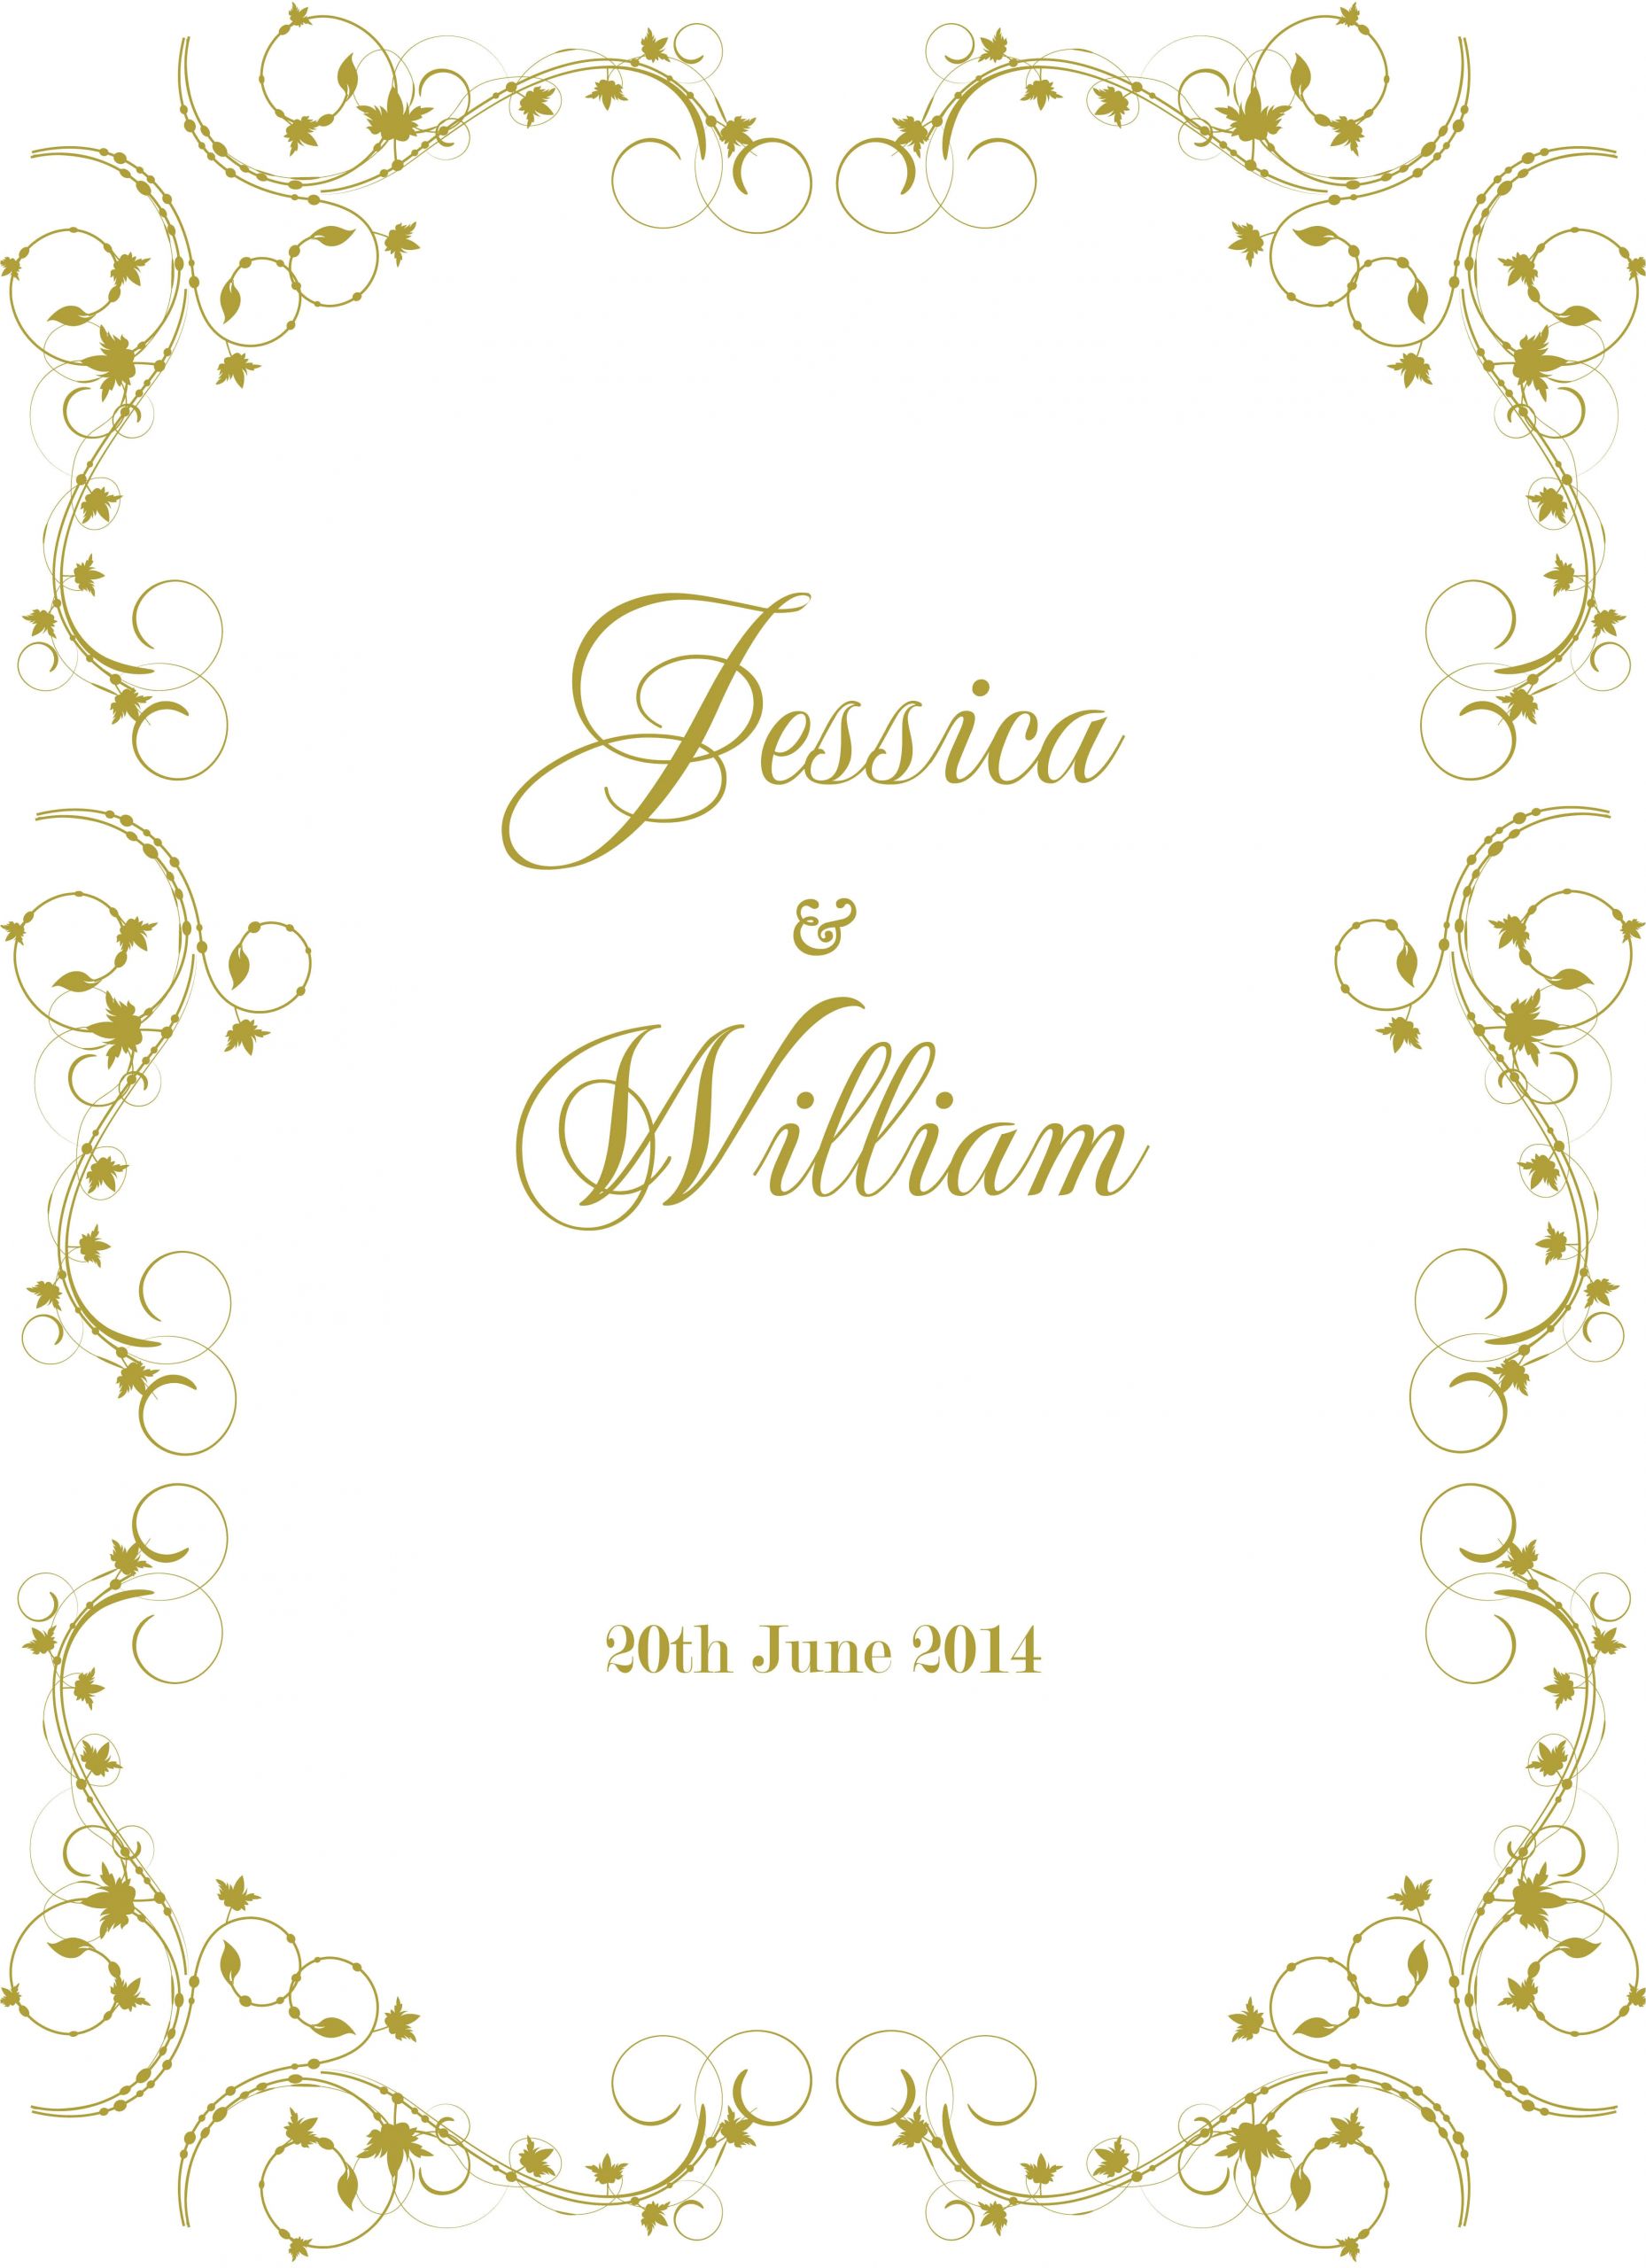 Border Design for Wedding Invitation Card Wedding Border Designs with Images Photo Wedding